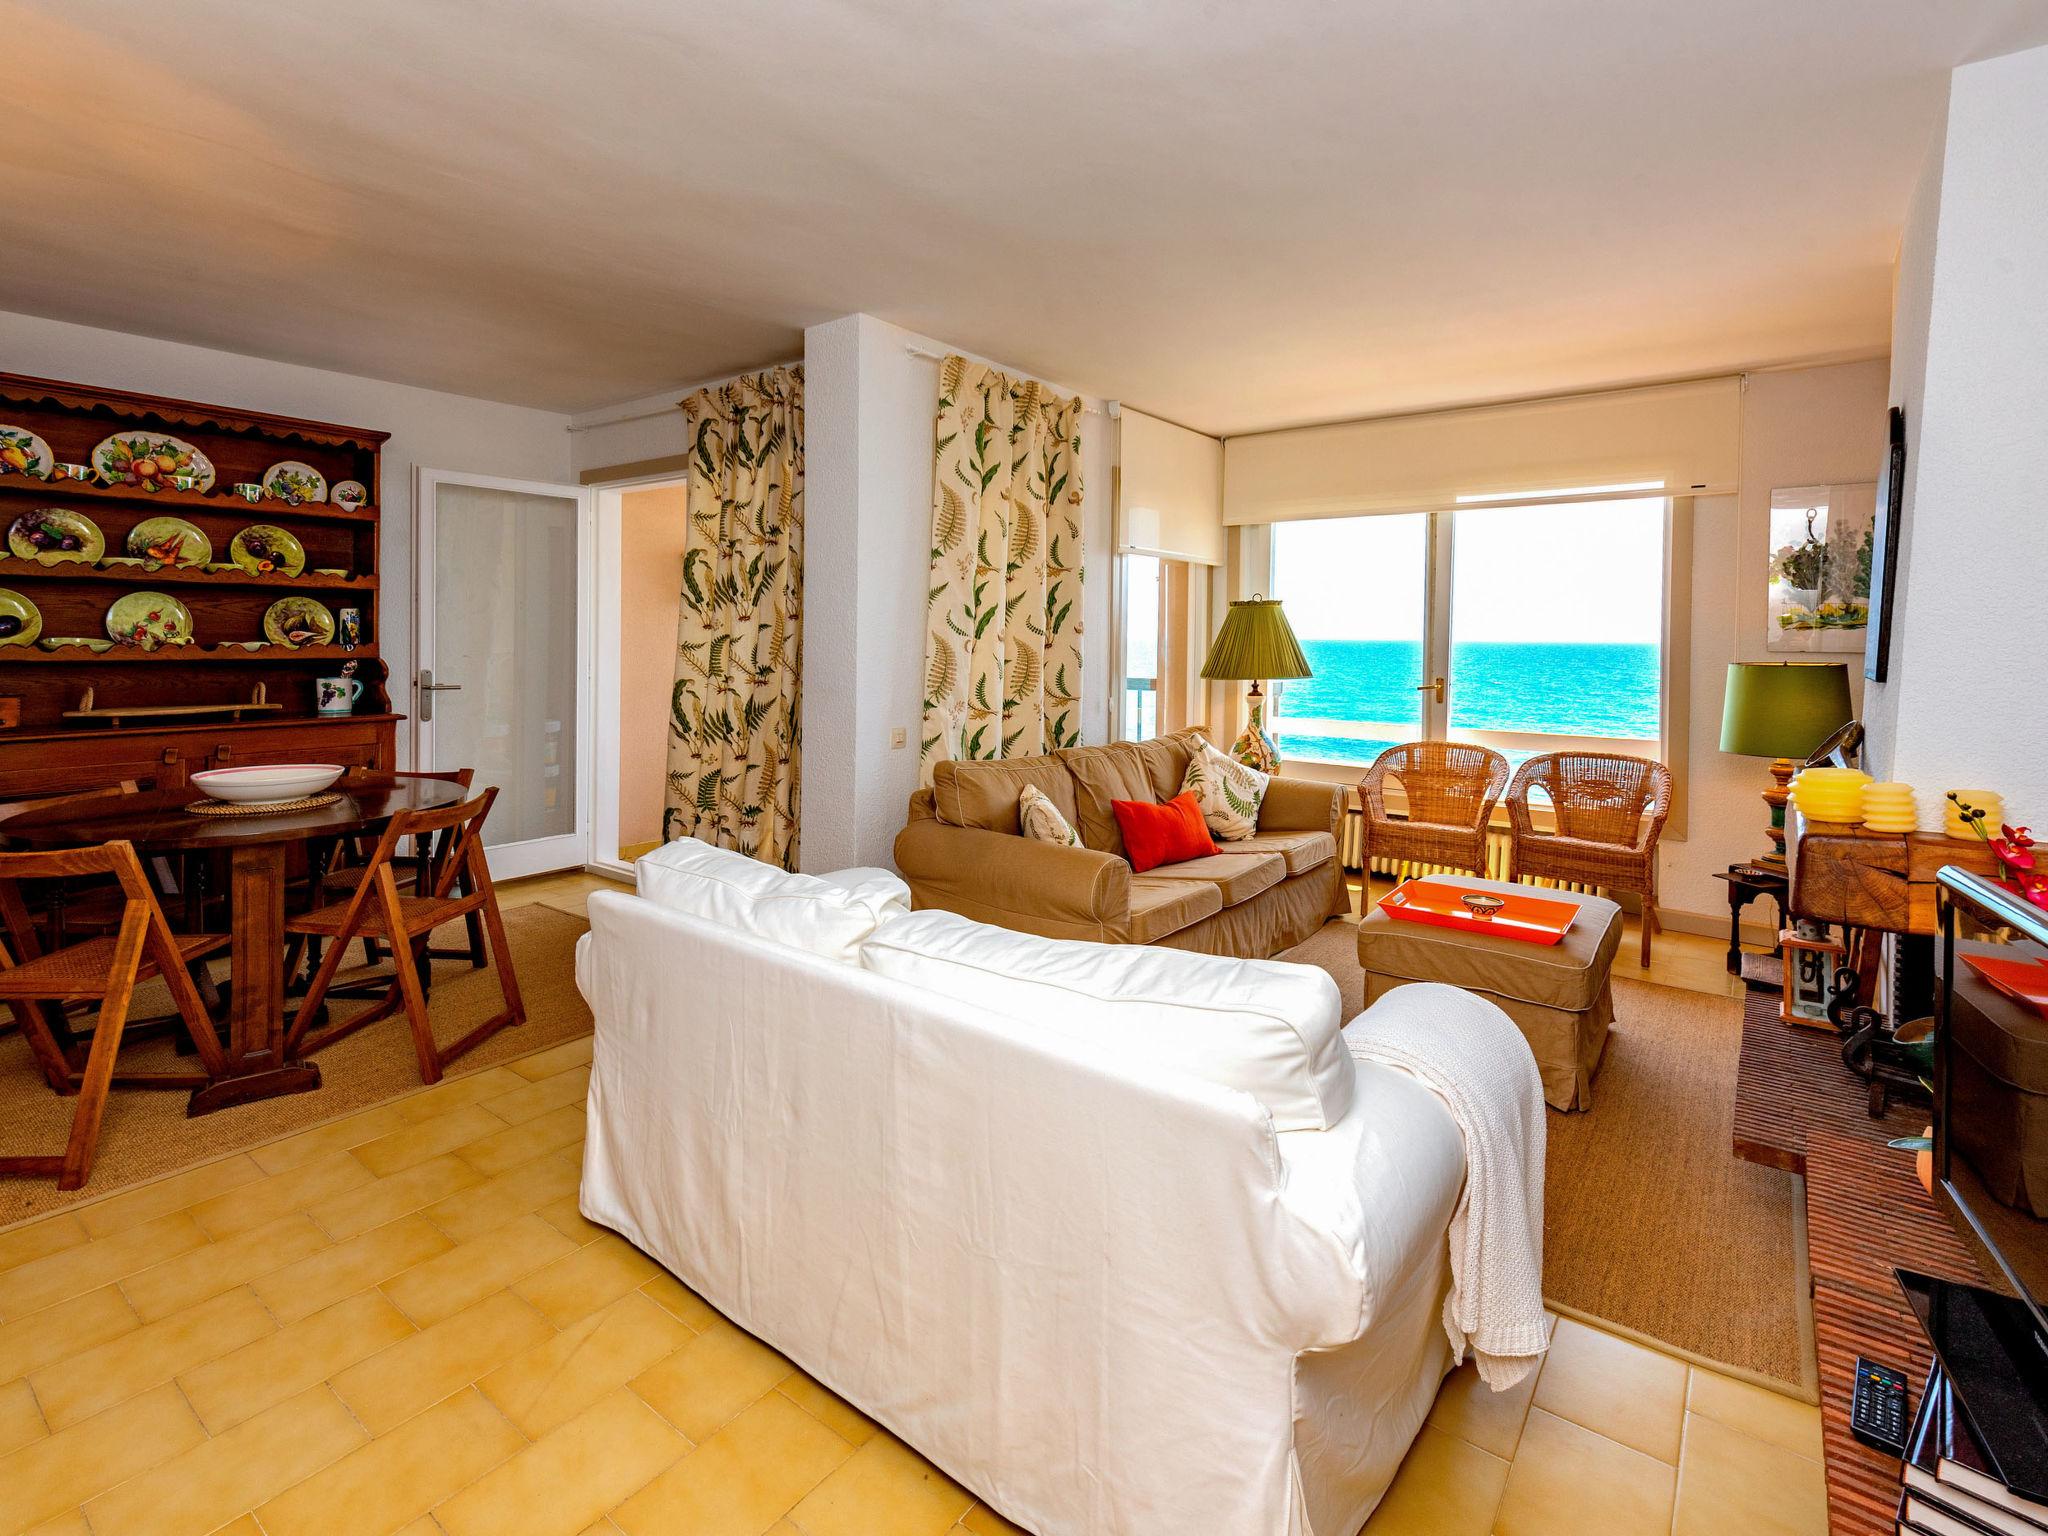 Photo 2 - Appartement de 3 chambres à Sant Andreu de Llavaneres avec piscine et vues à la mer